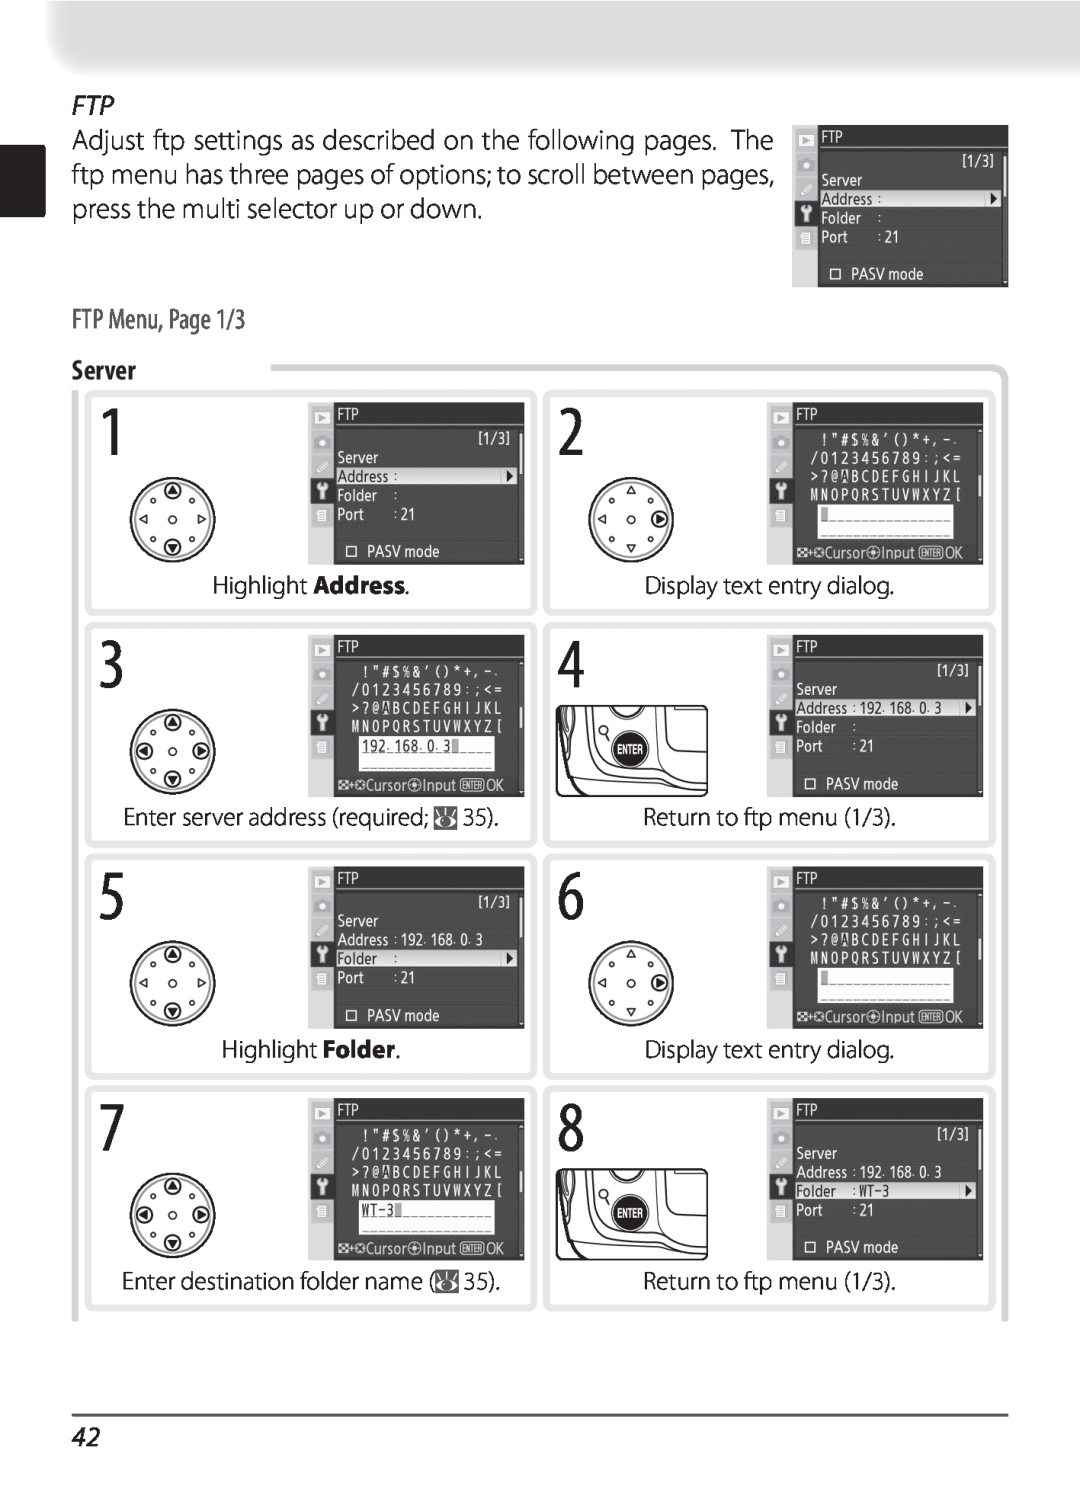 Nikon WT-3 user manual FTP Menu, Page 1/3, Server 